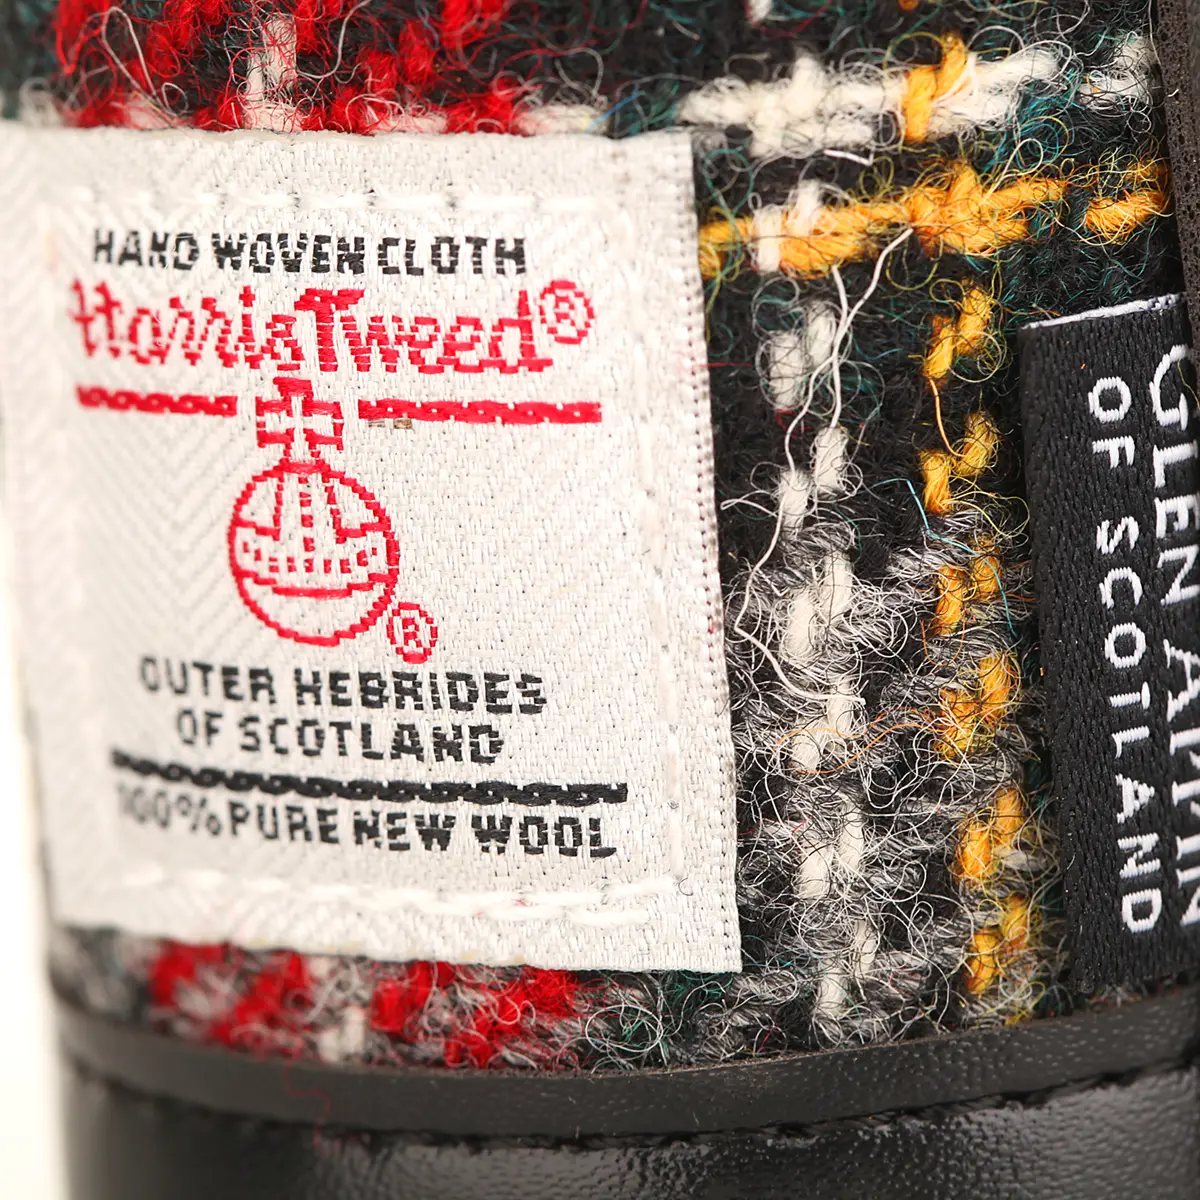 Harris Tweed Hunting Flask / Campingflasche in Grey and Red Tartan